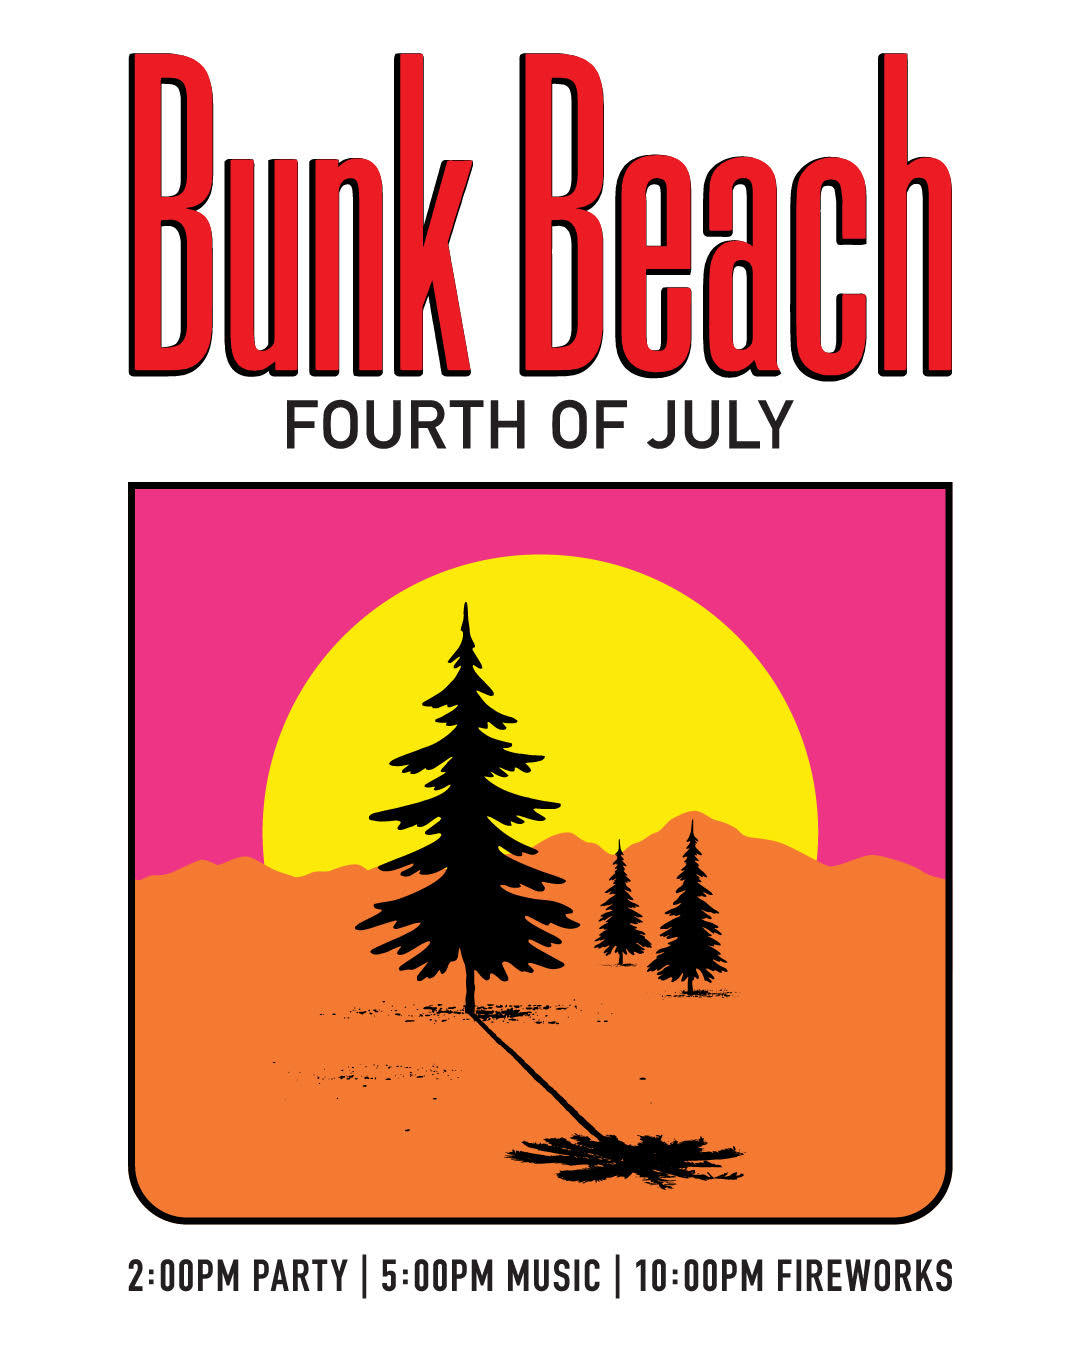 bunk beach official instagram image.jpg